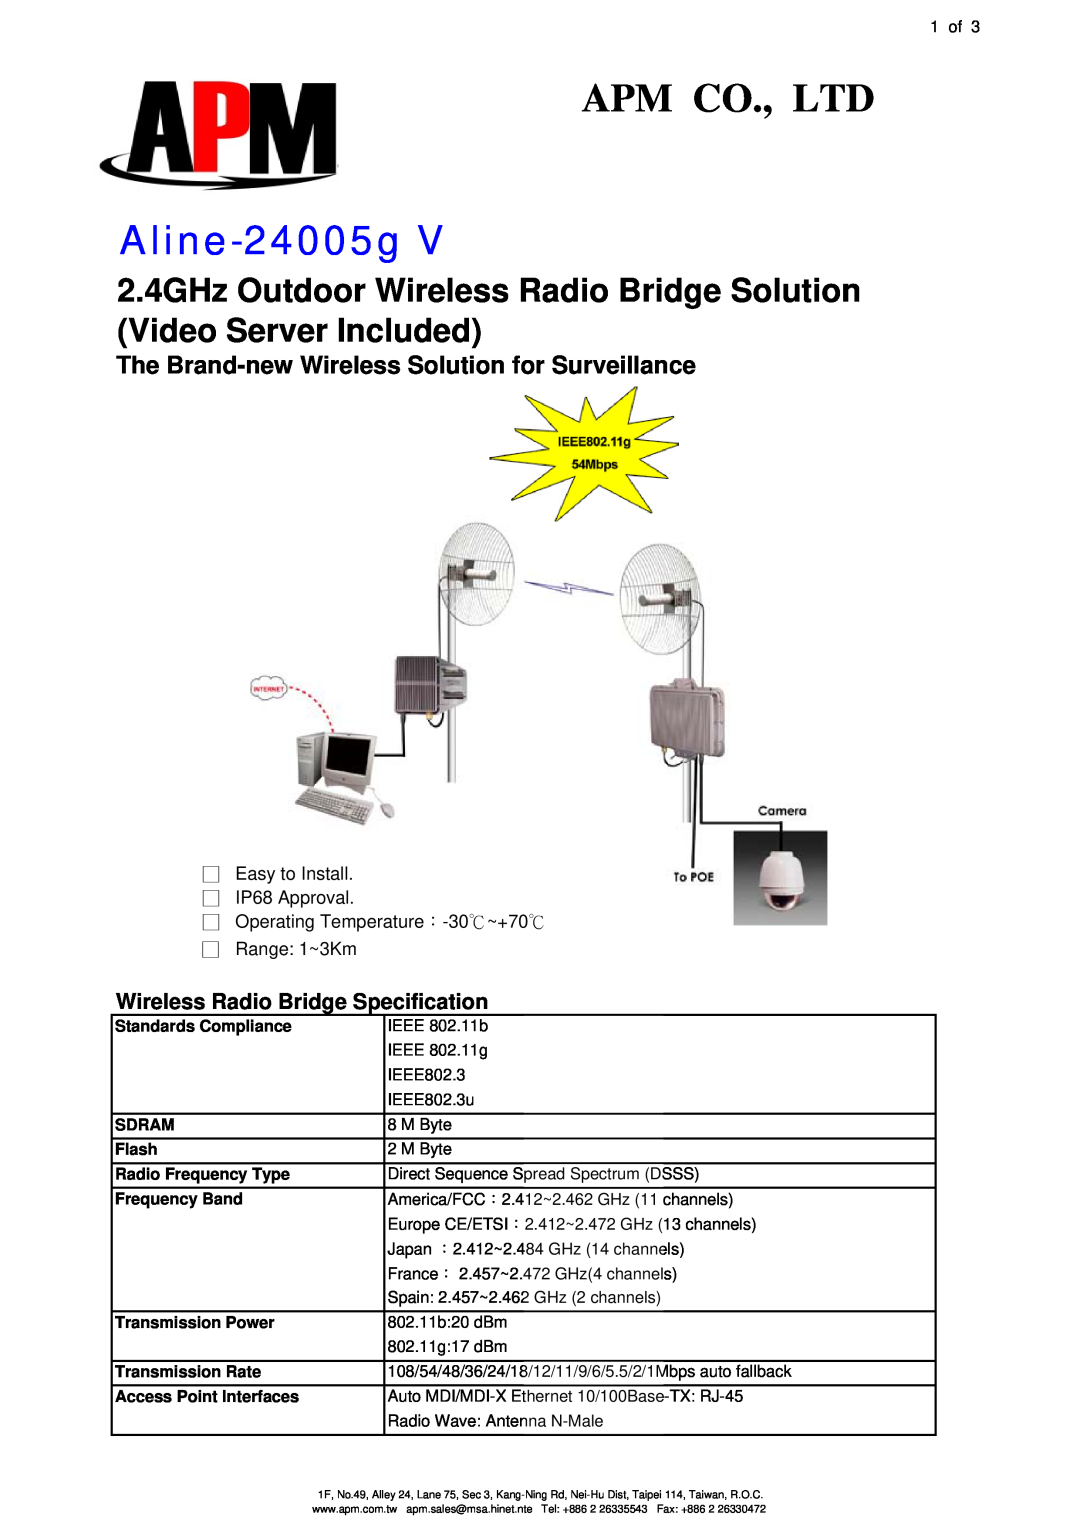 APM Aline-24005g V specifications Wireless Radio Bridge Specification, The Brand-new Wireless Solution for Surveillance 